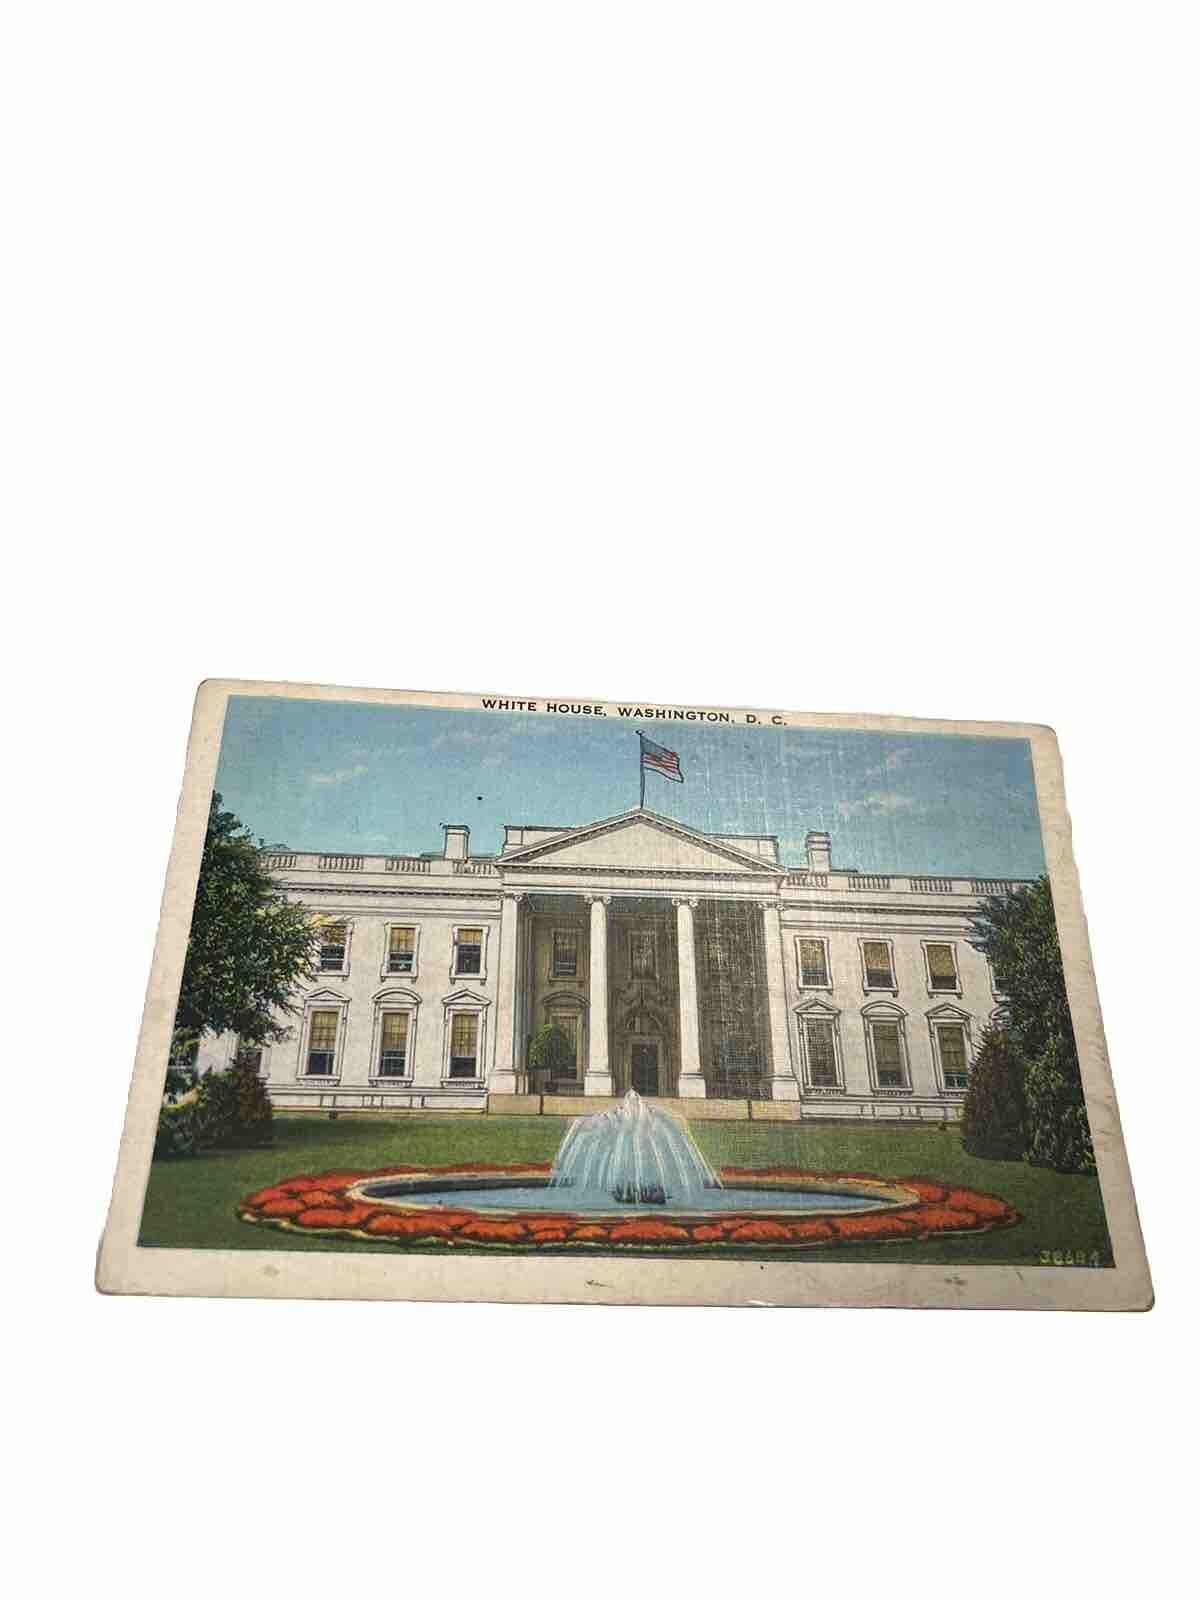 White House, Washington D.C. Old Vintage Travel Postcard, Linen 1930-1945.